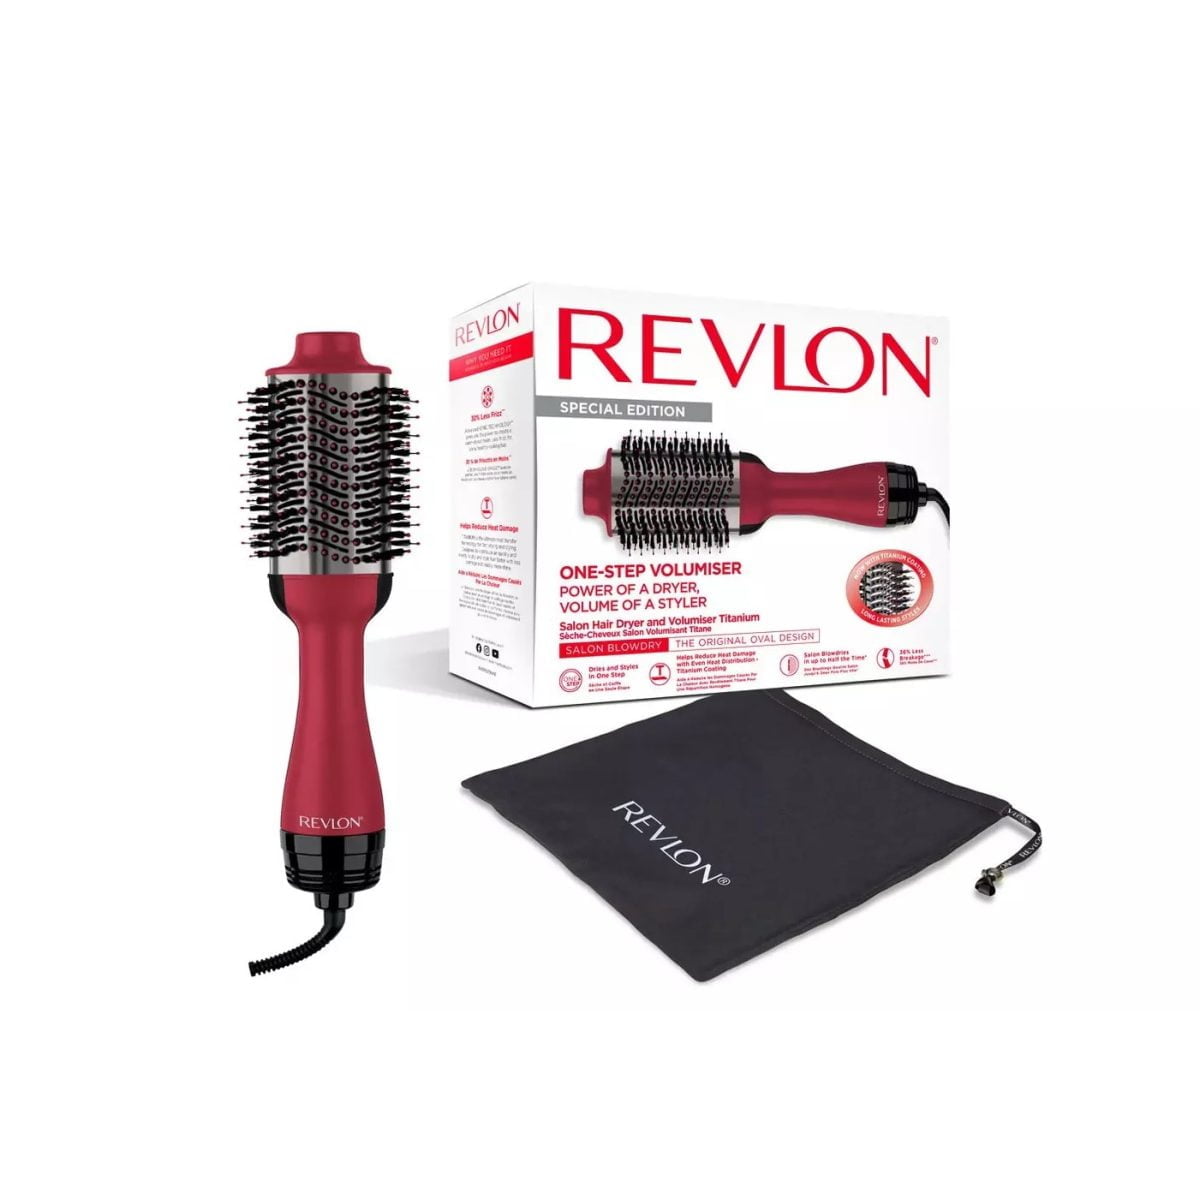 Revelon Hair Dryer And Volumiser Titanium